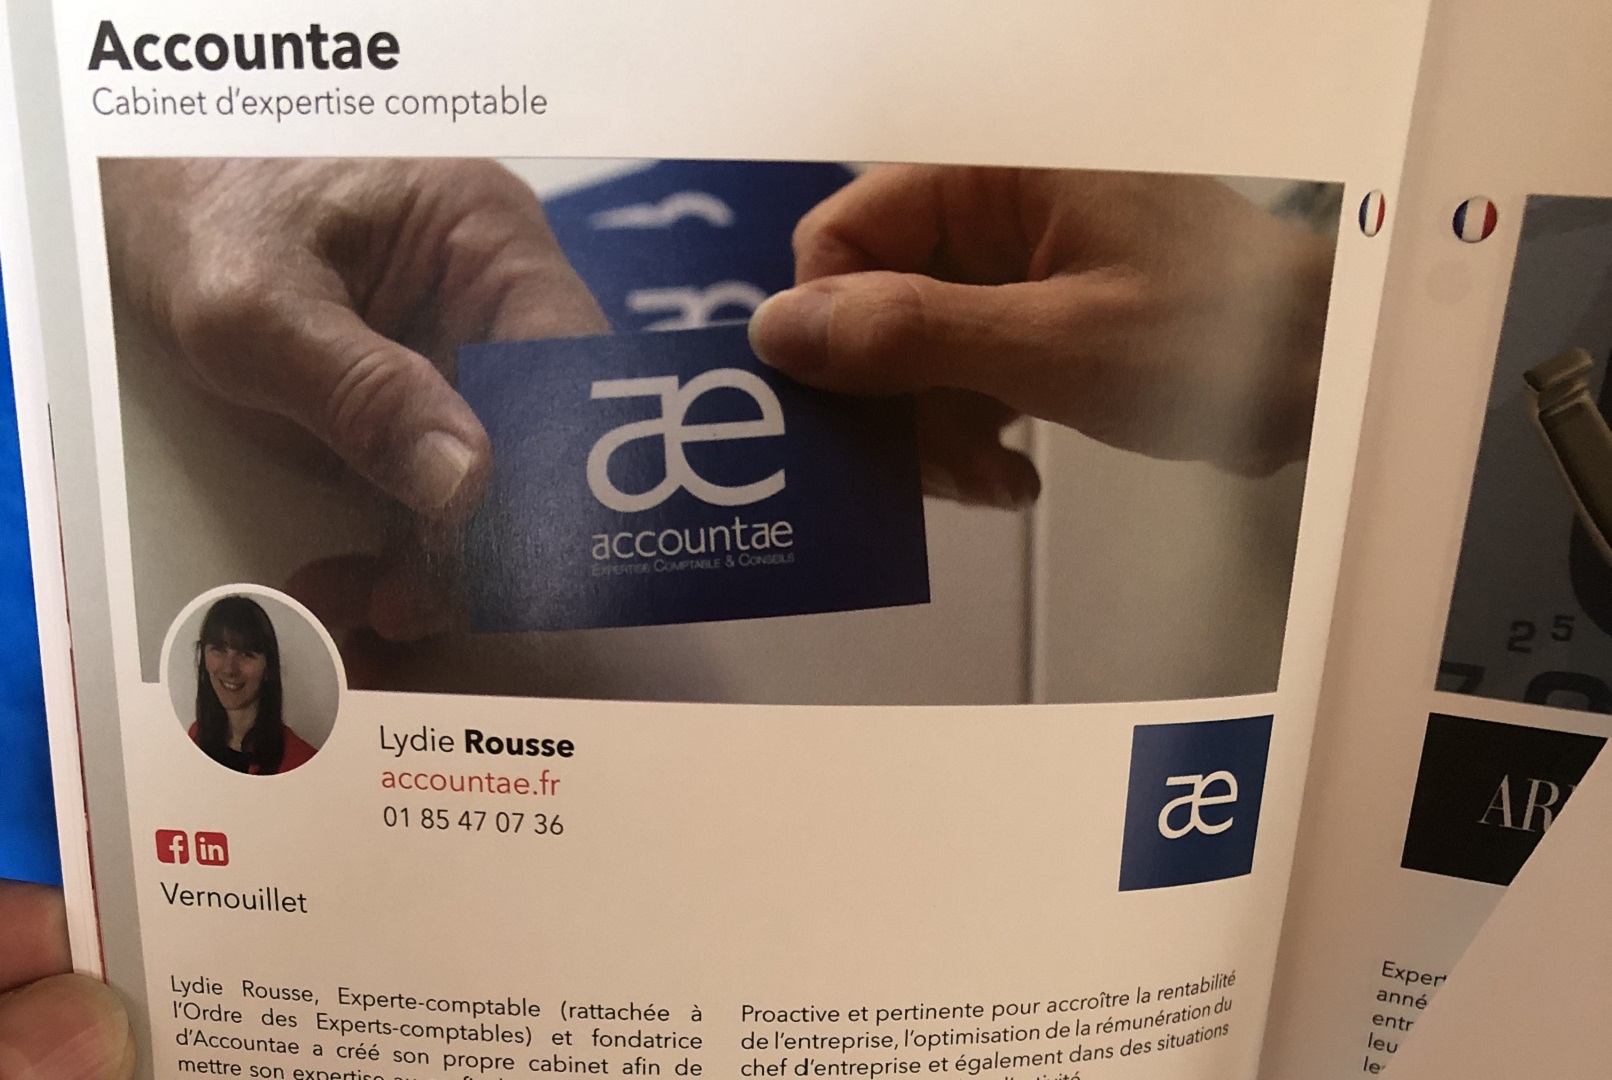 Accountae expertise comptable Vernouillet Yvelines - book femmes entrepreneures